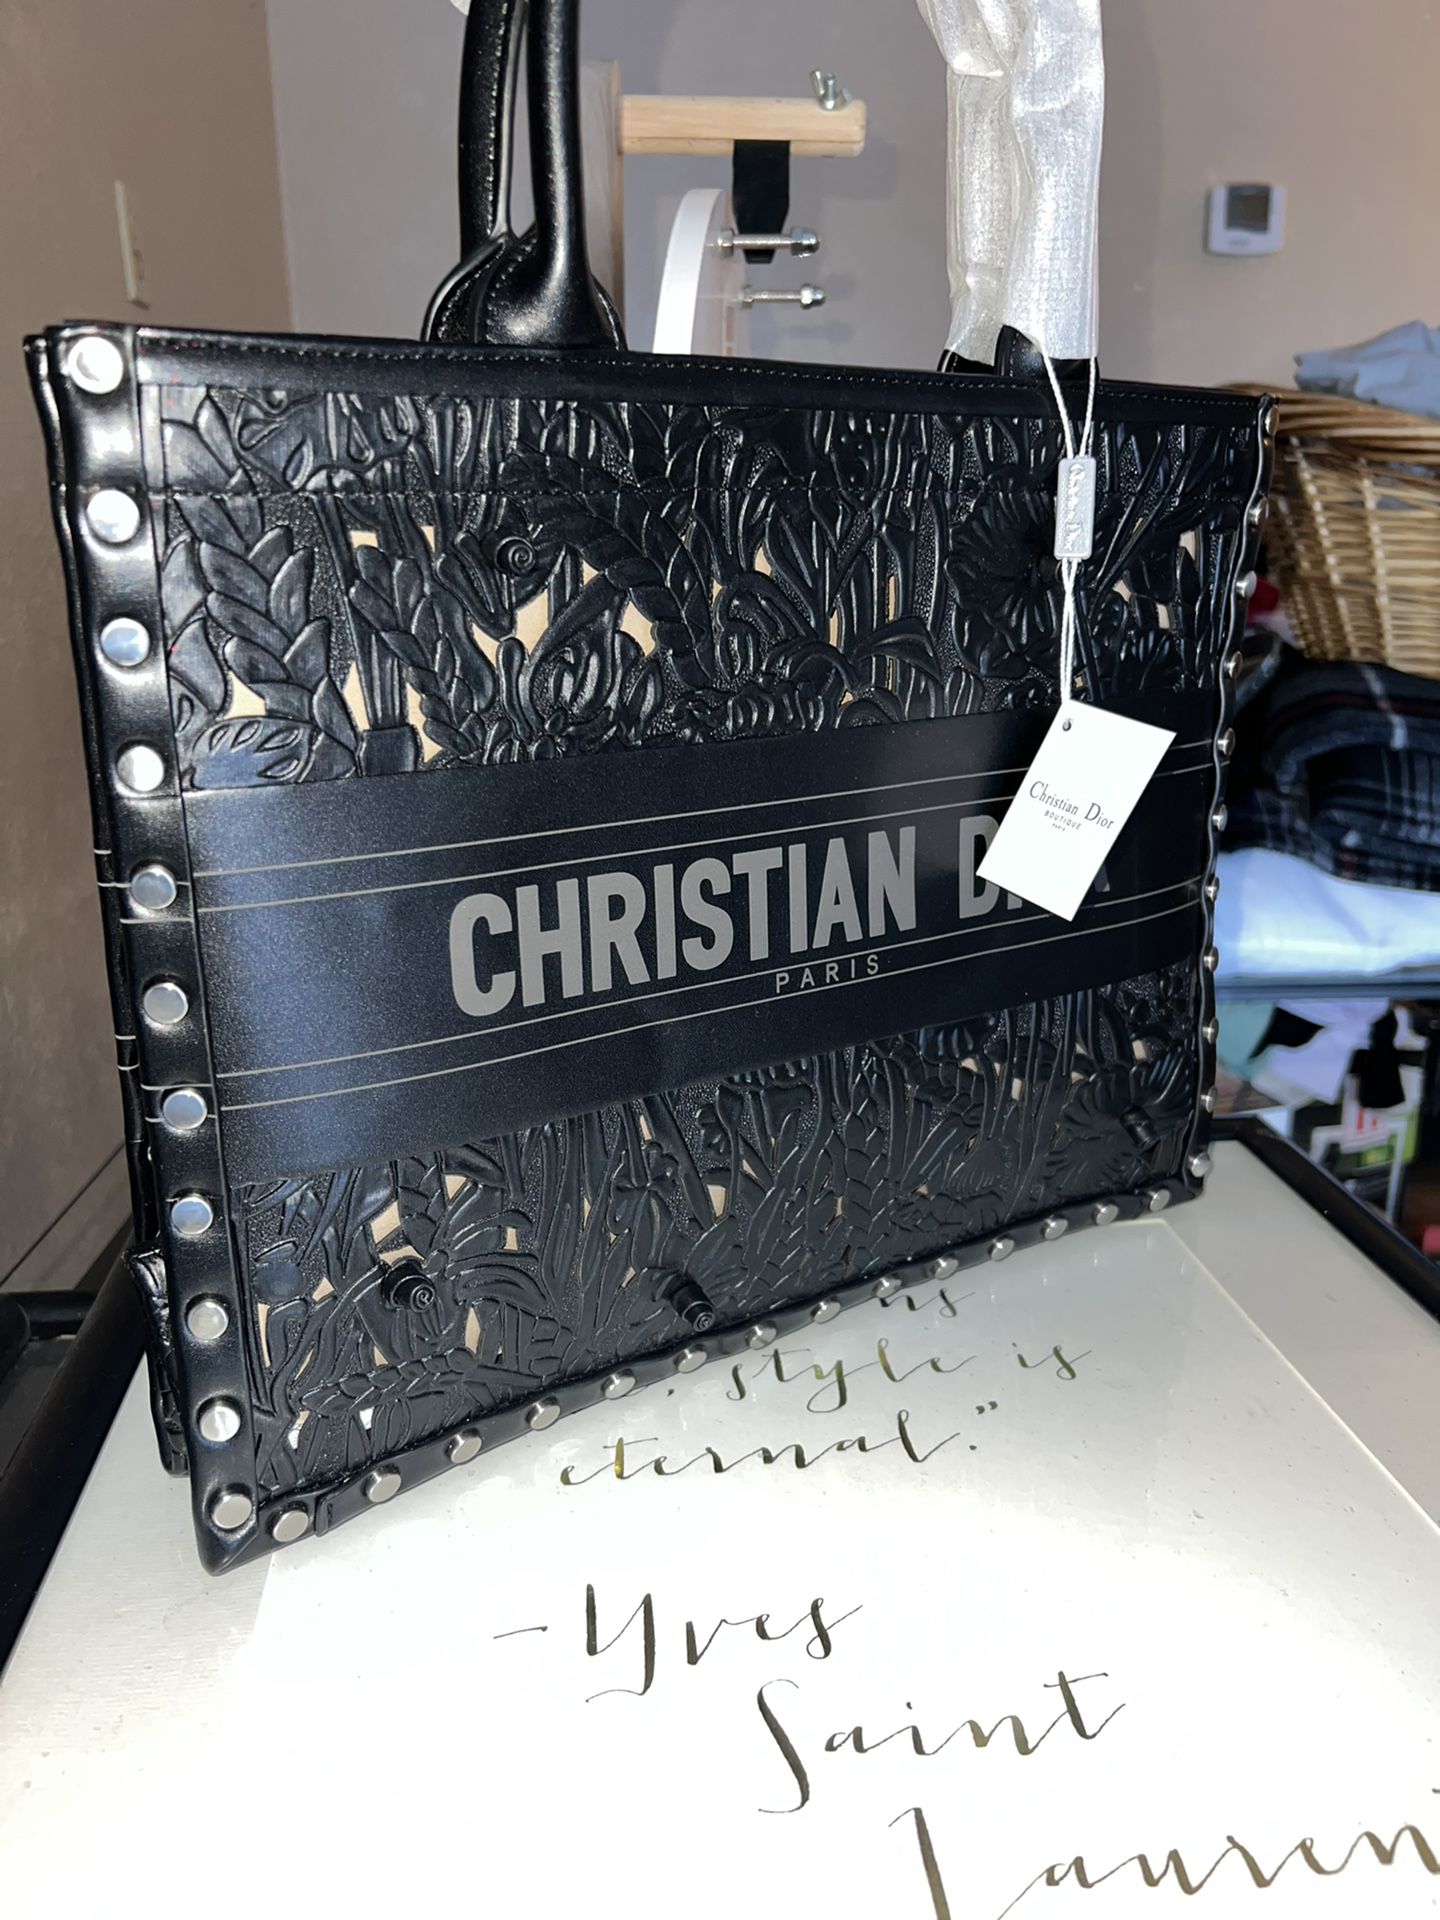 Christian Dior Tote Bag